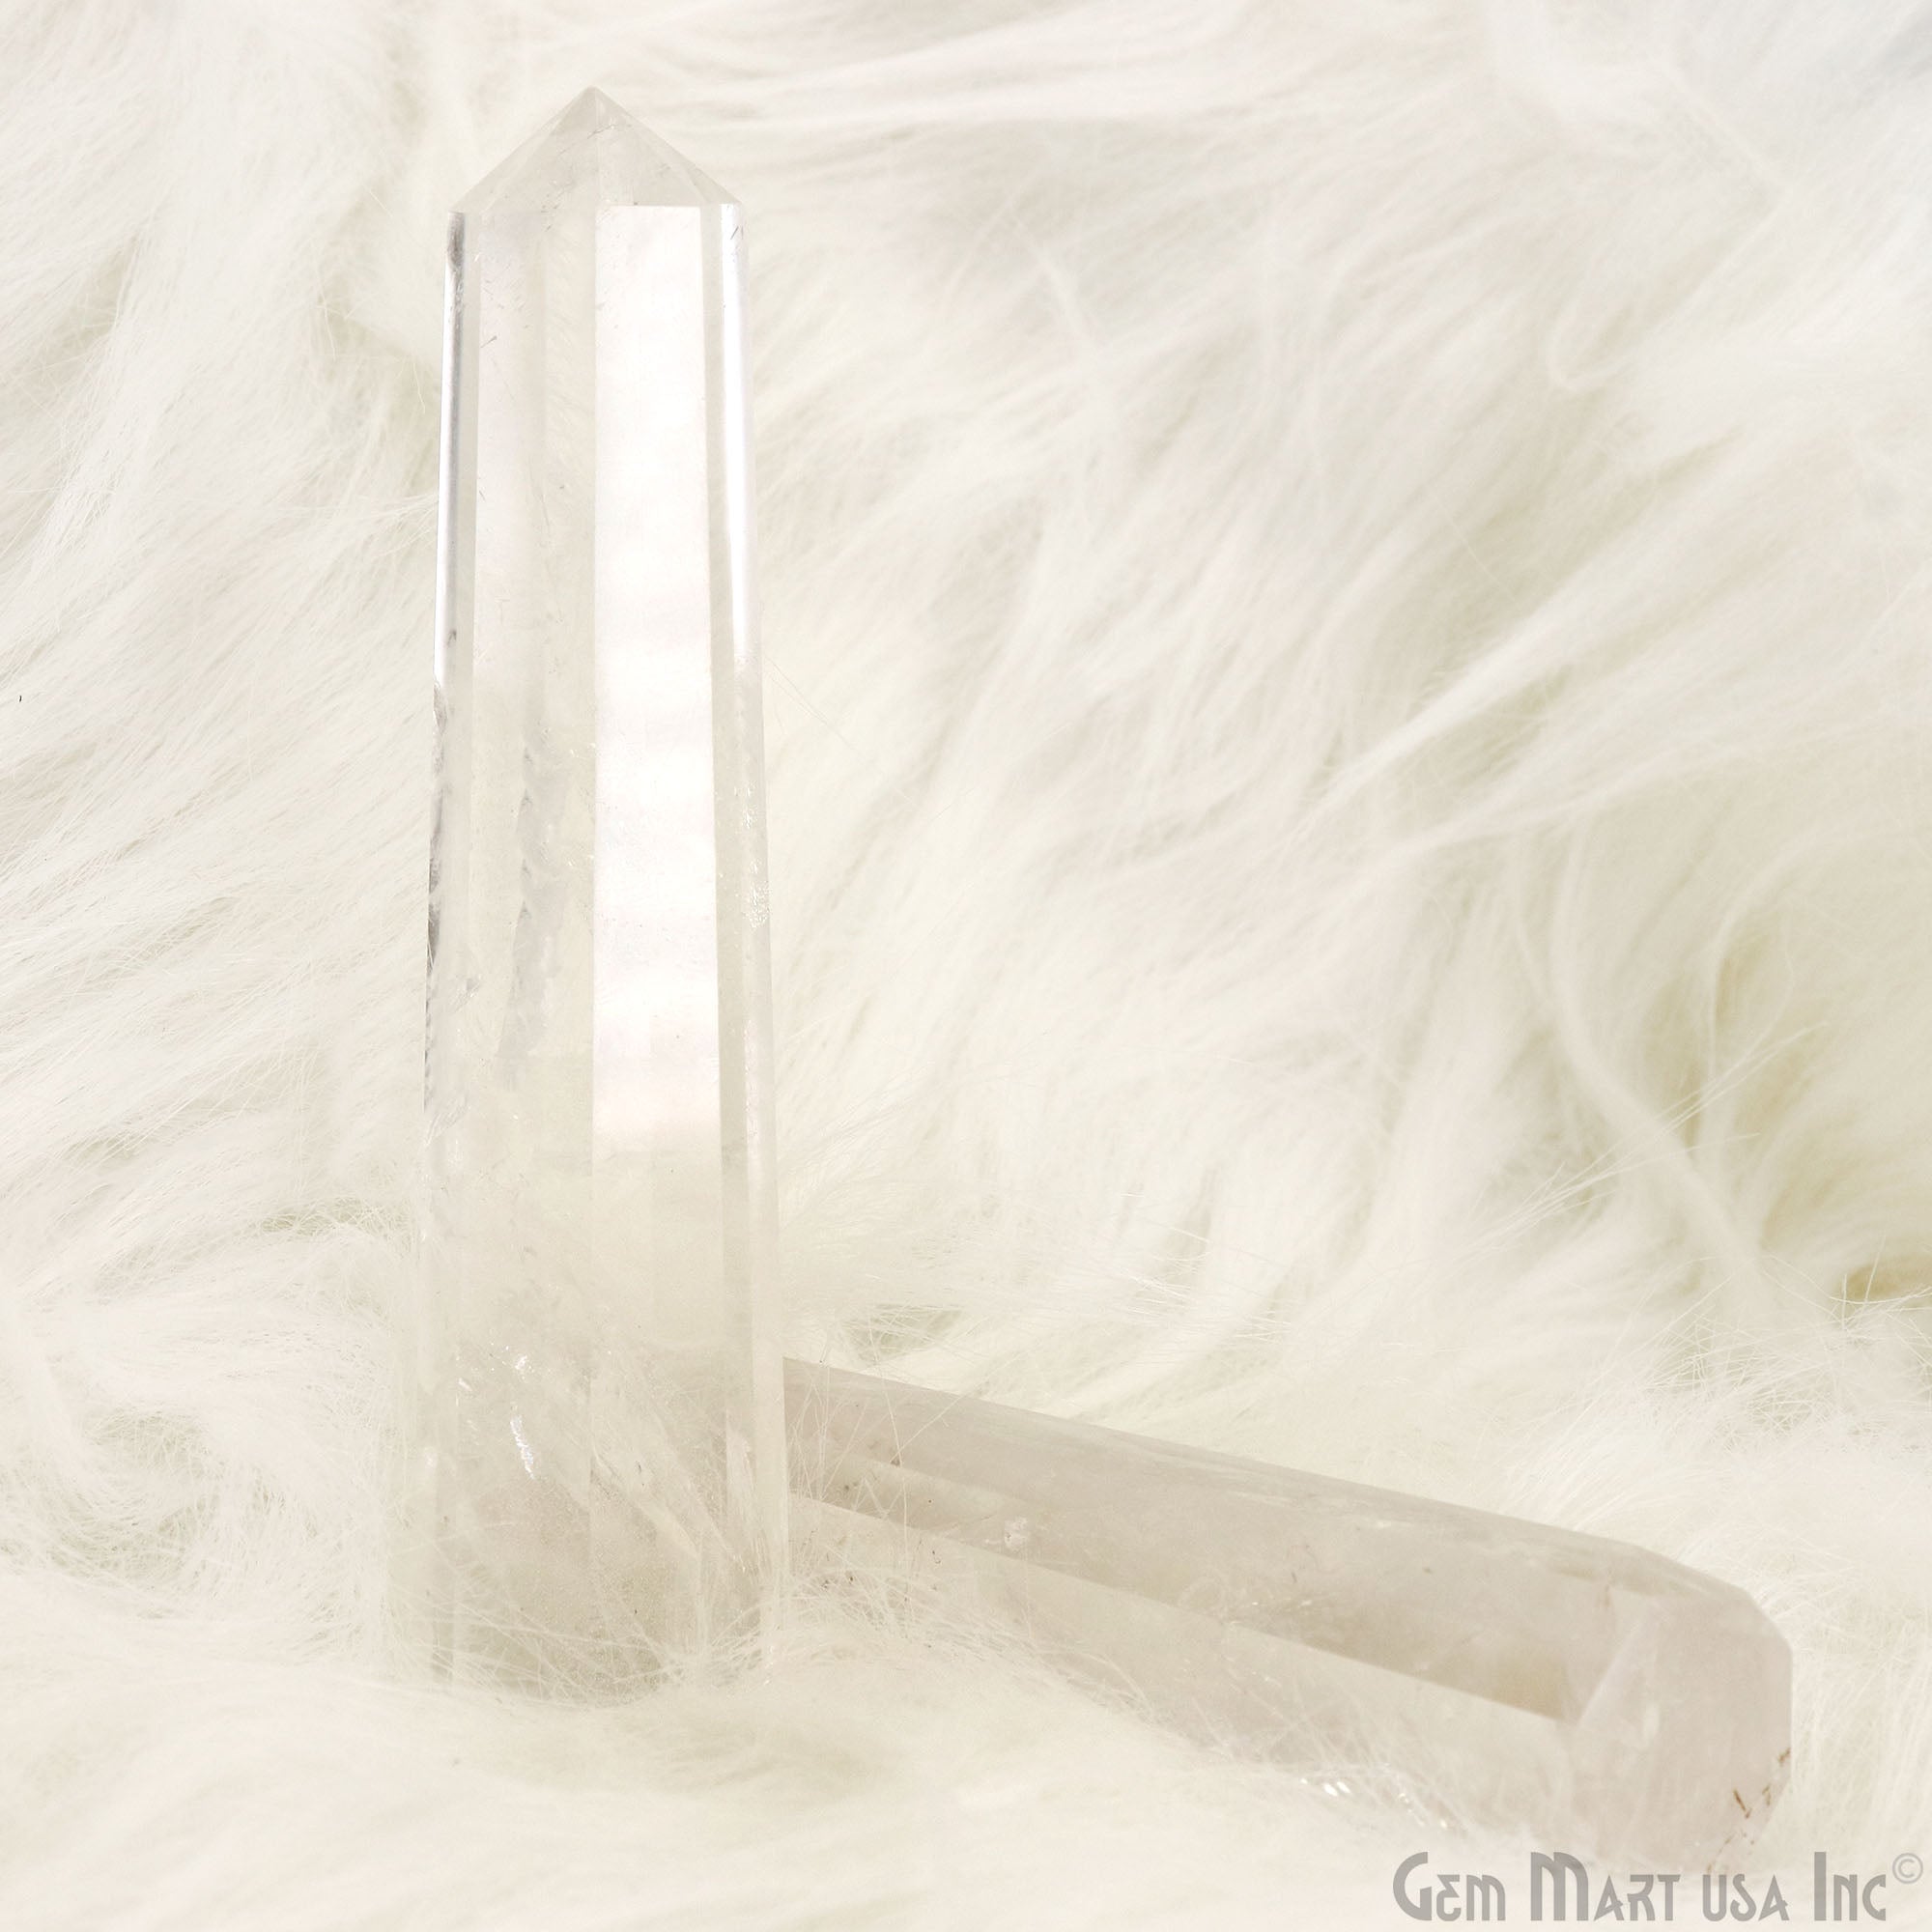 Crystal Gemstone Jumbo Tower Crystal Tower Obelisk Healing Meditation Gemstones 4-5 Inch